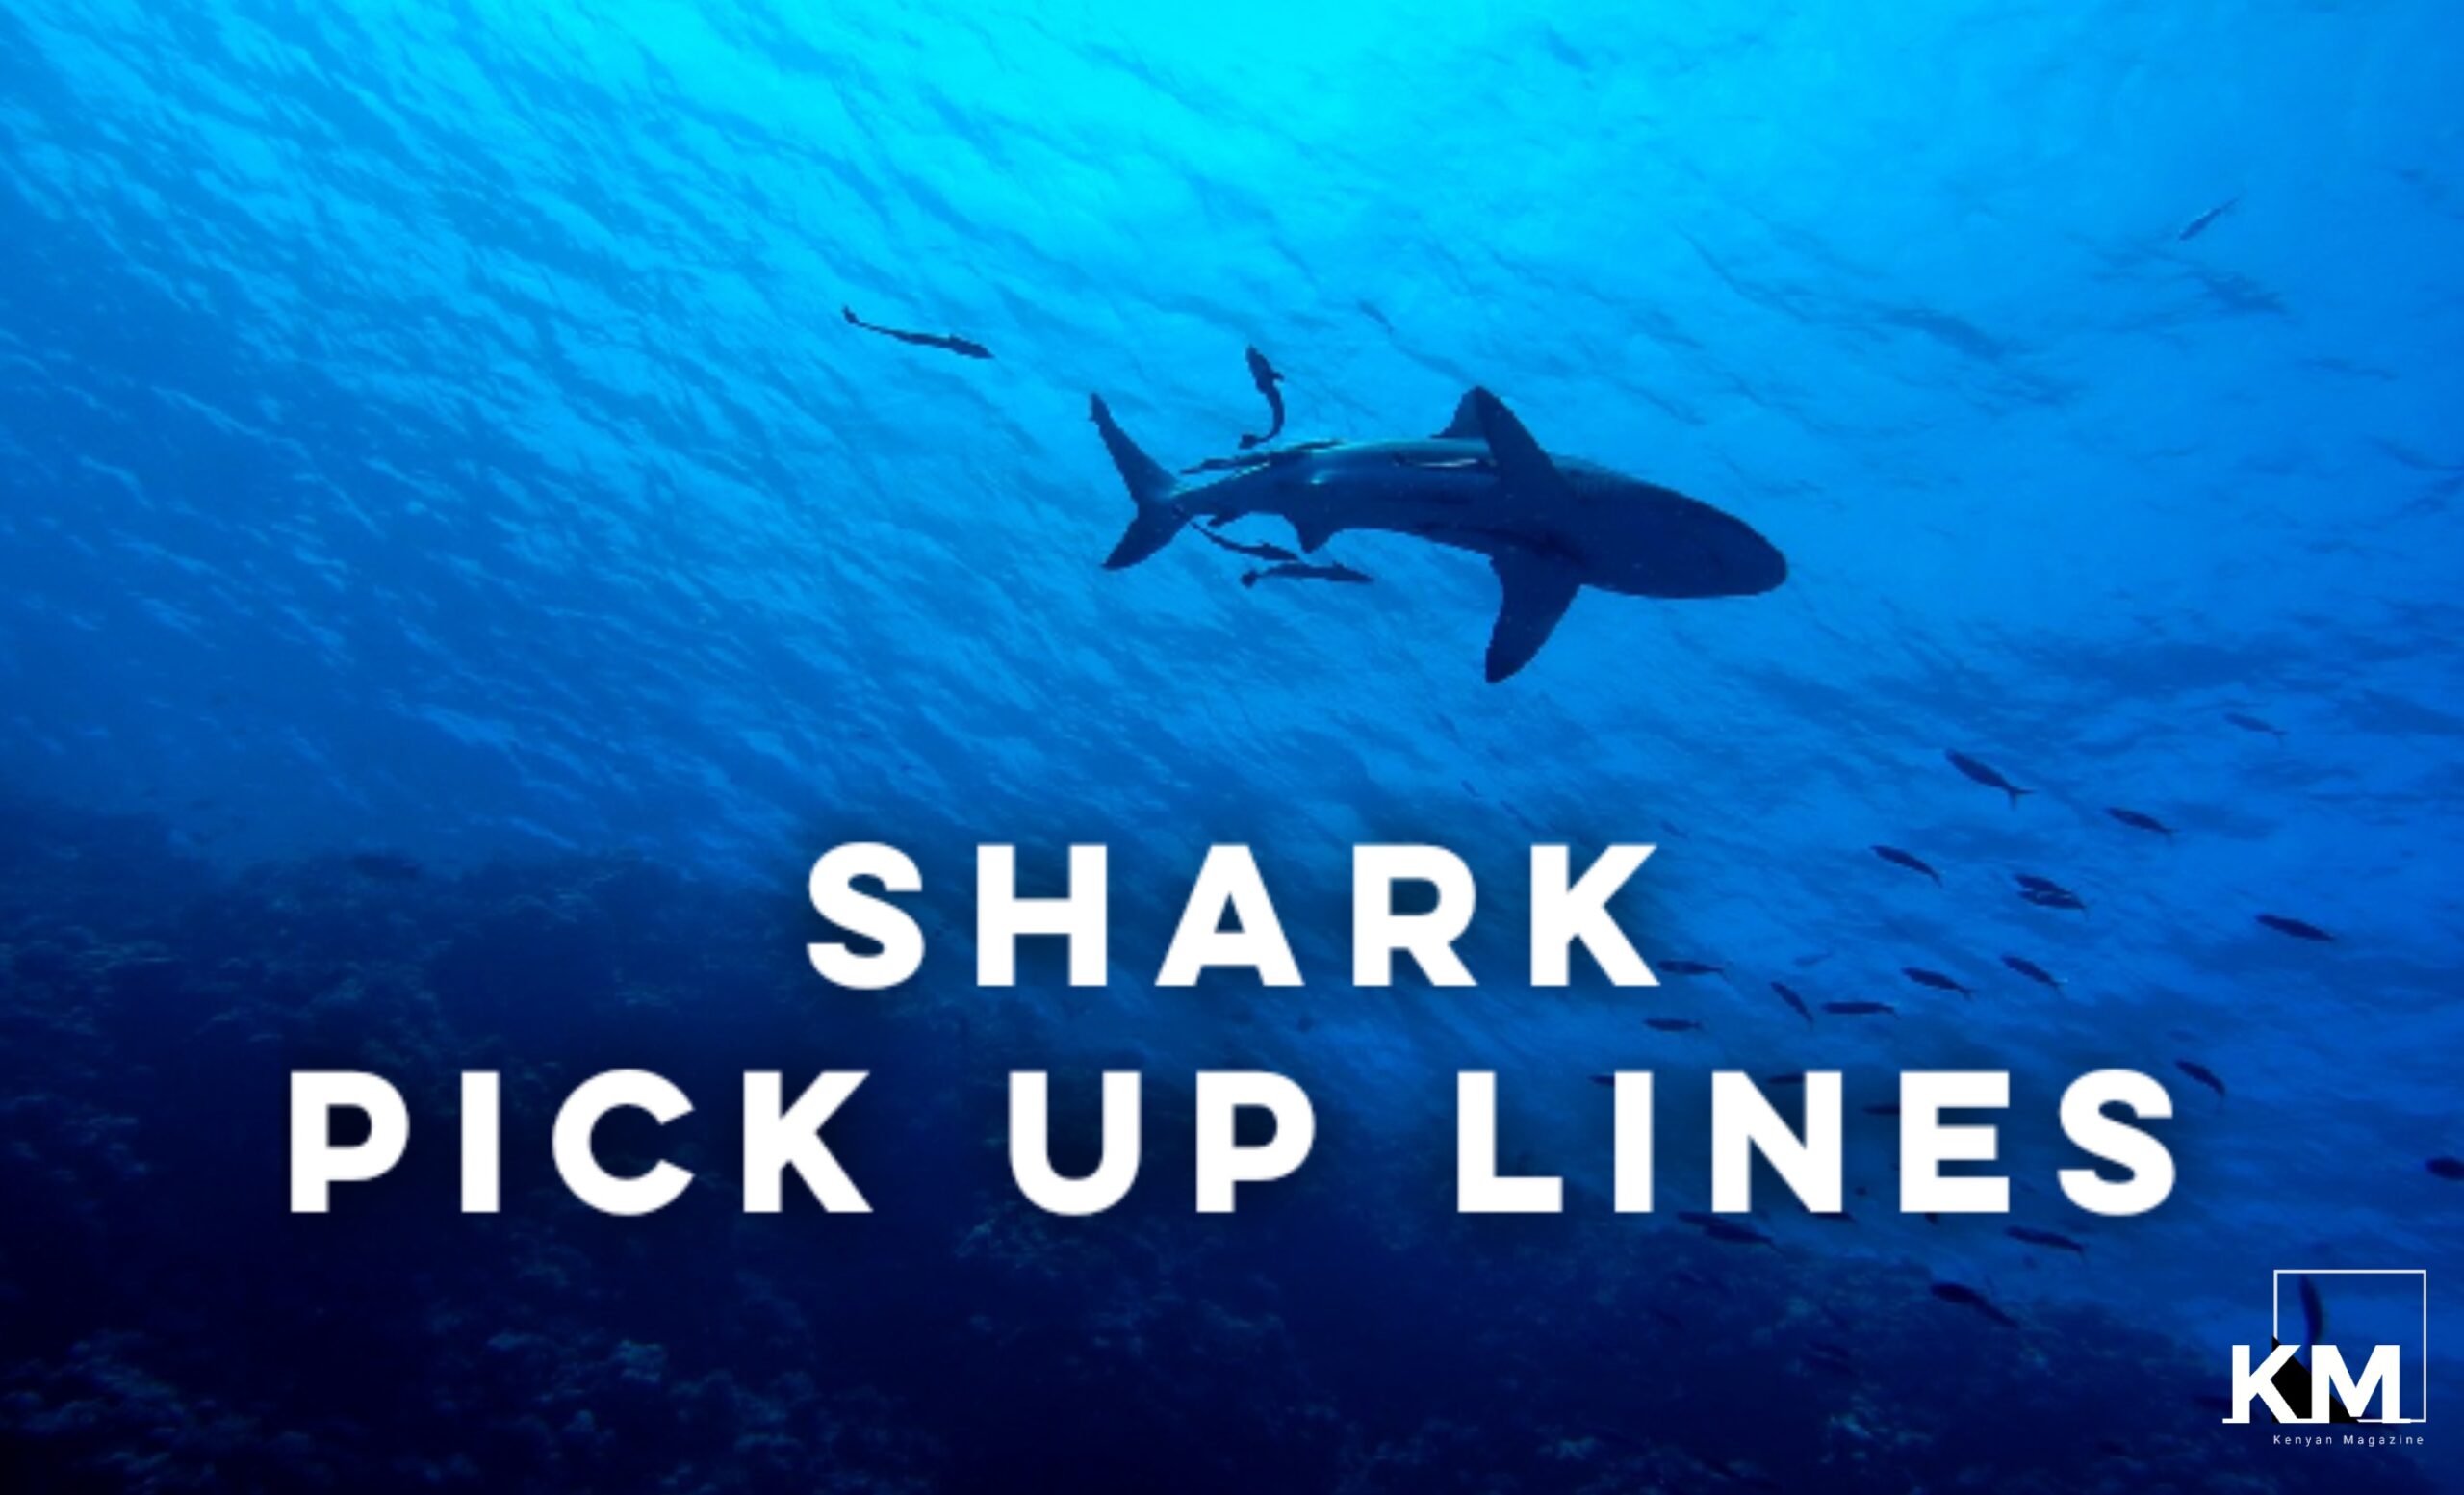 Shark pick up lines